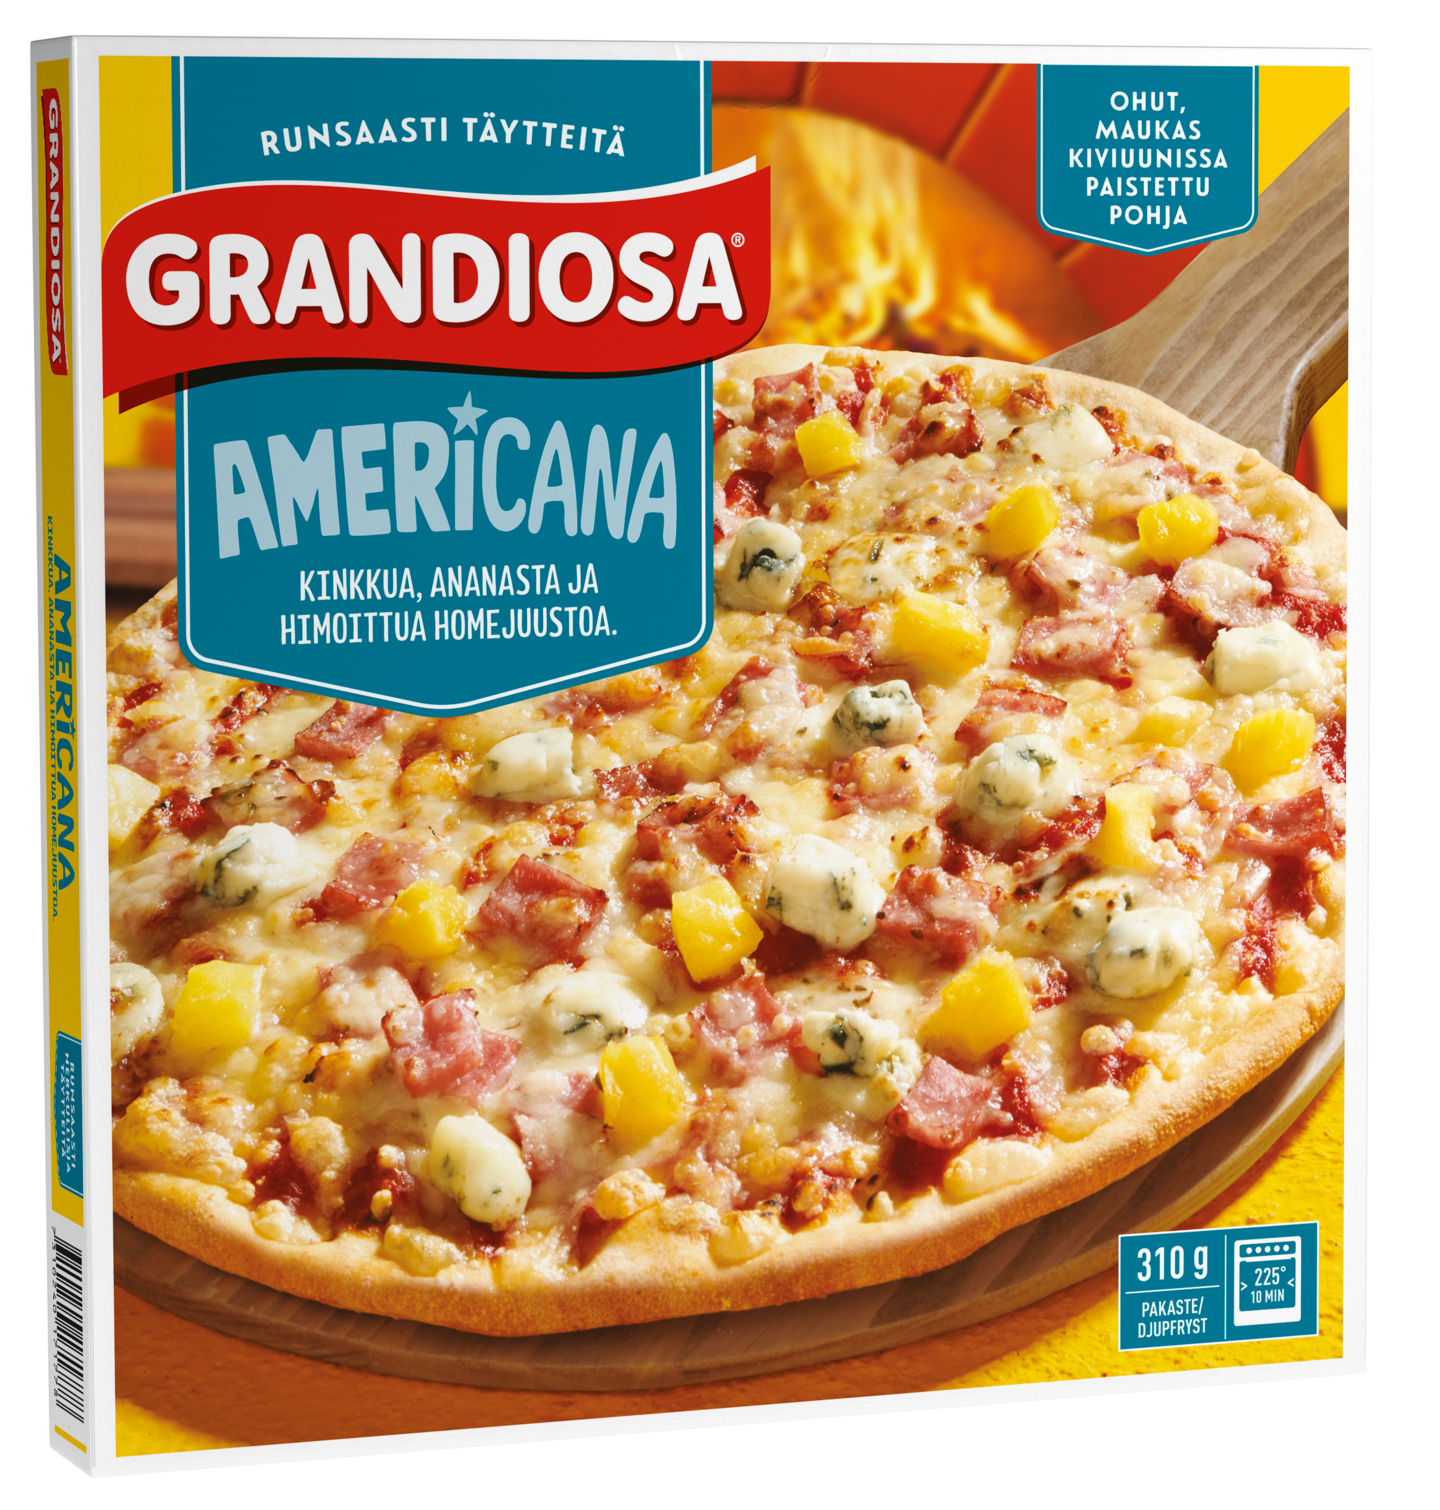 Grandiosa pizza American 310g kiviuunipizza pakaste